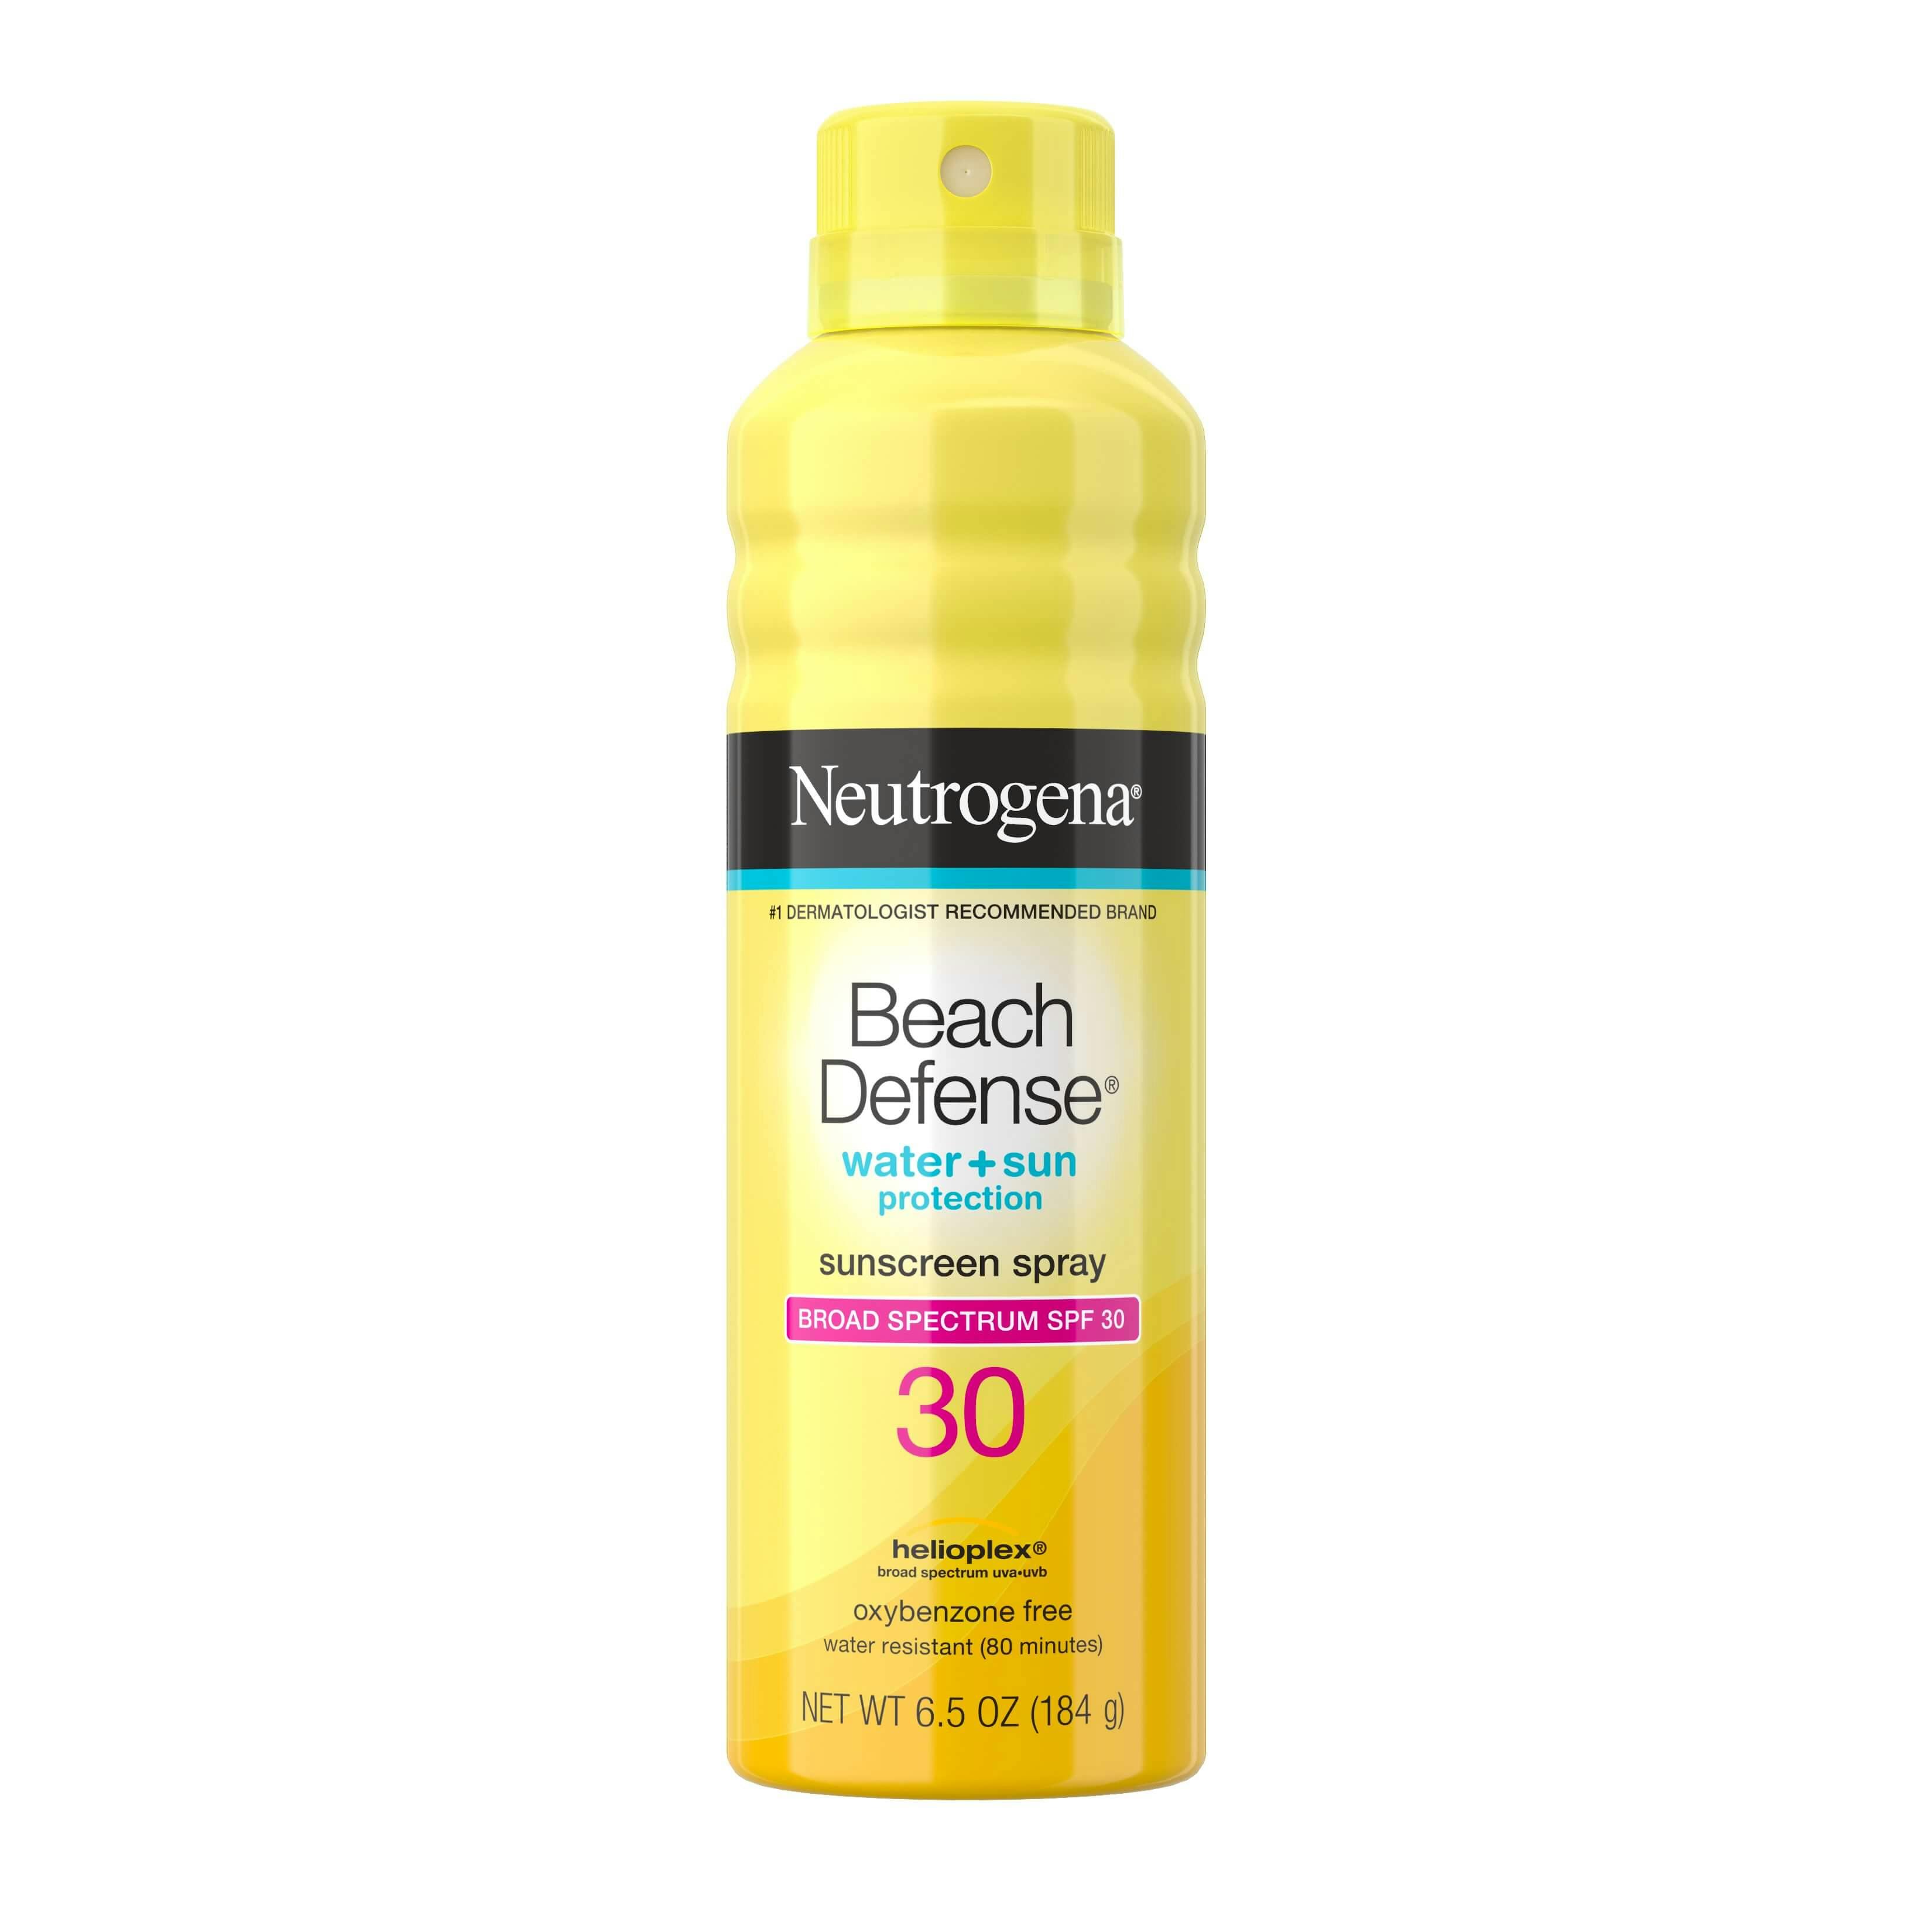 neutrogena sunscreen spray walmart